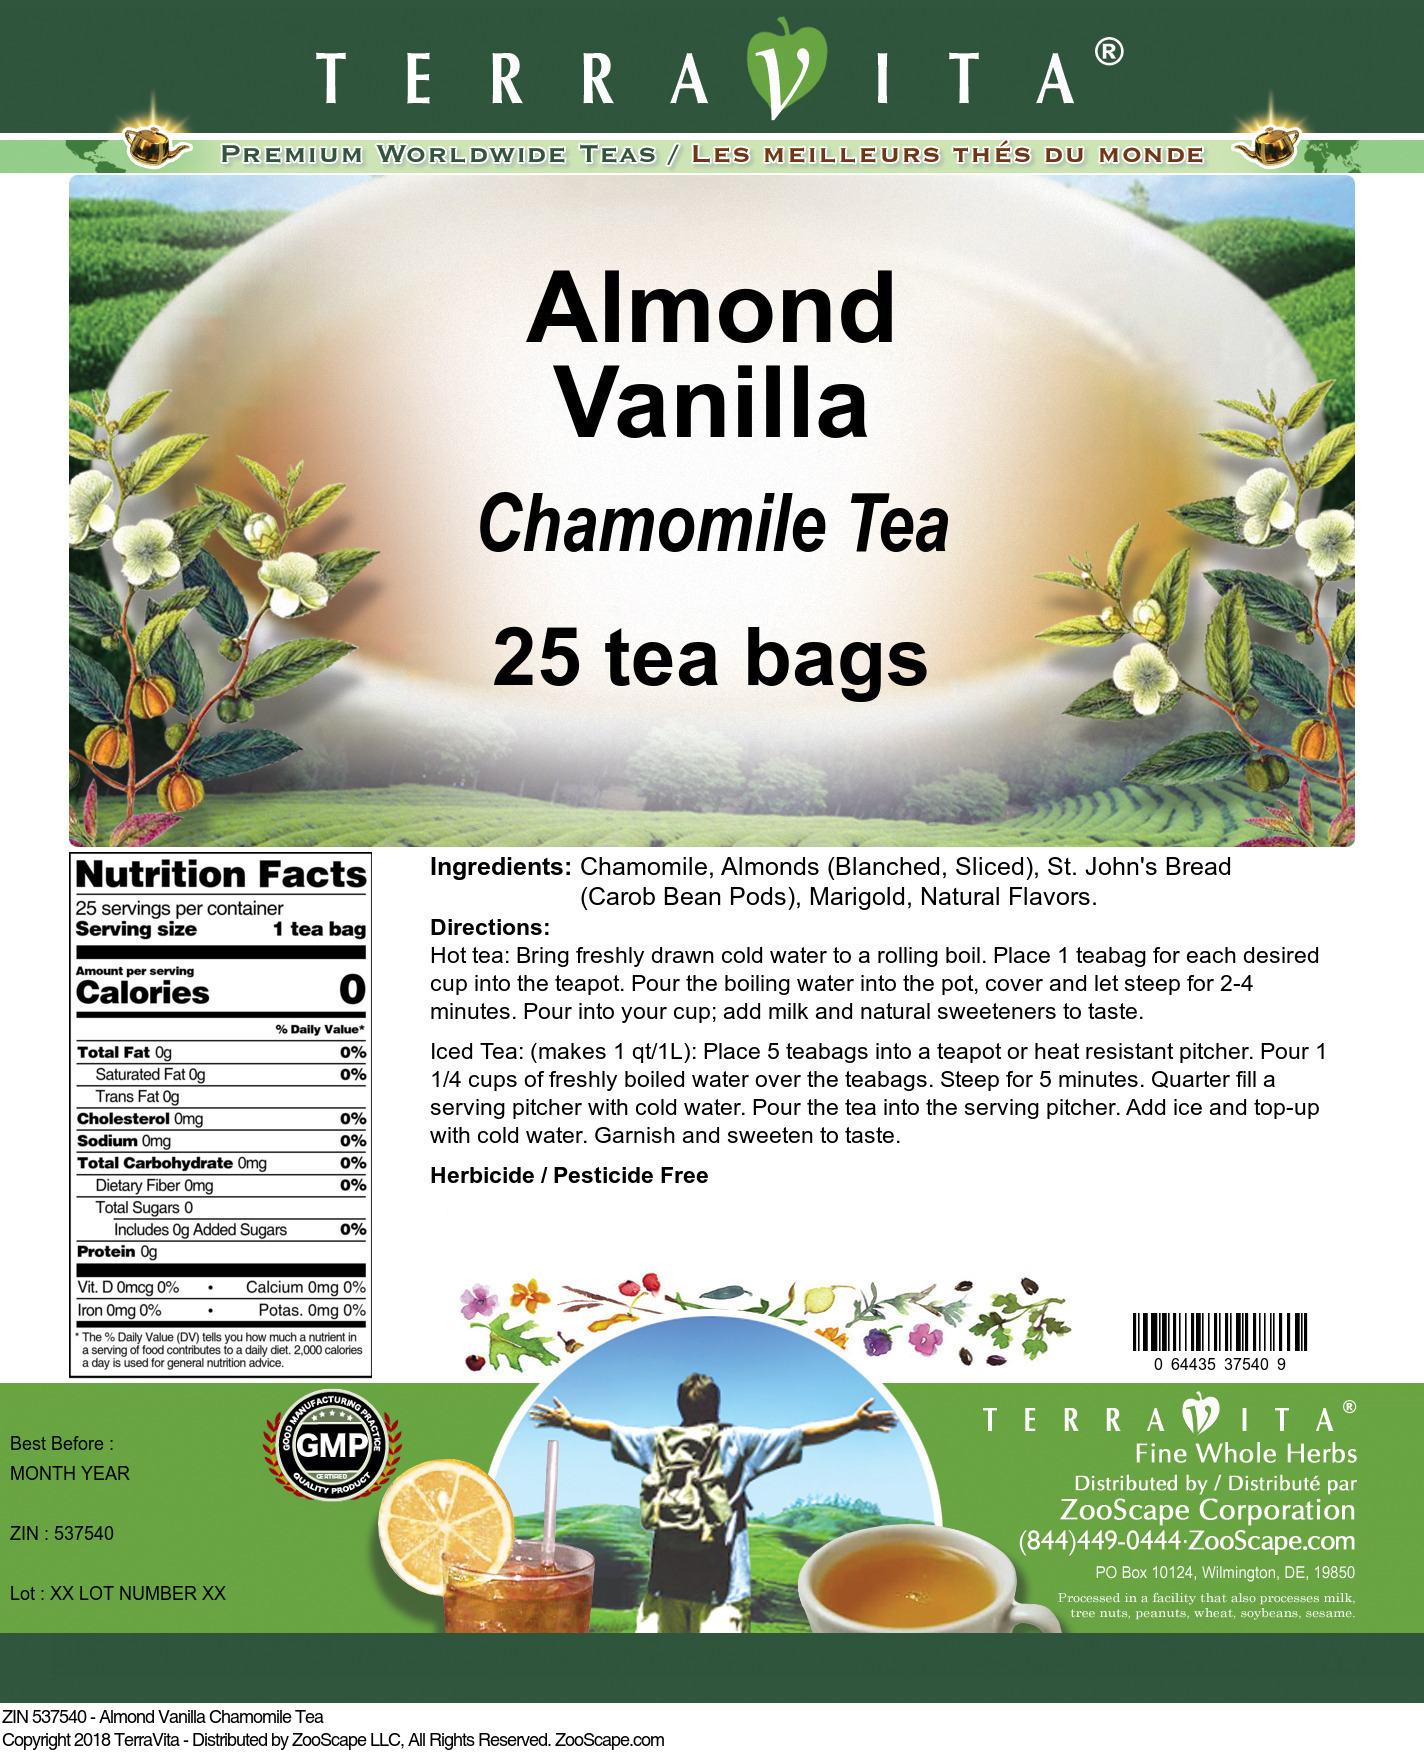 Almond Vanilla Chamomile Tea - Label